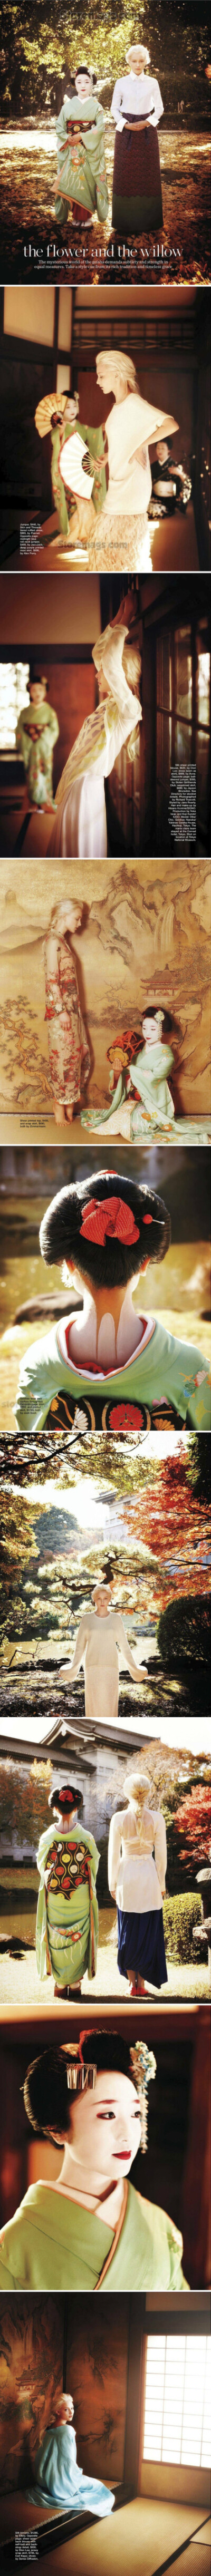 The Flower and the Willow（花与柳），一种日本与西方相容又相对的矛盾感，一种若即若离的关系。摄影师 Richard Truscott 为杂志《Marie Claire》澳大利亚版所摄。